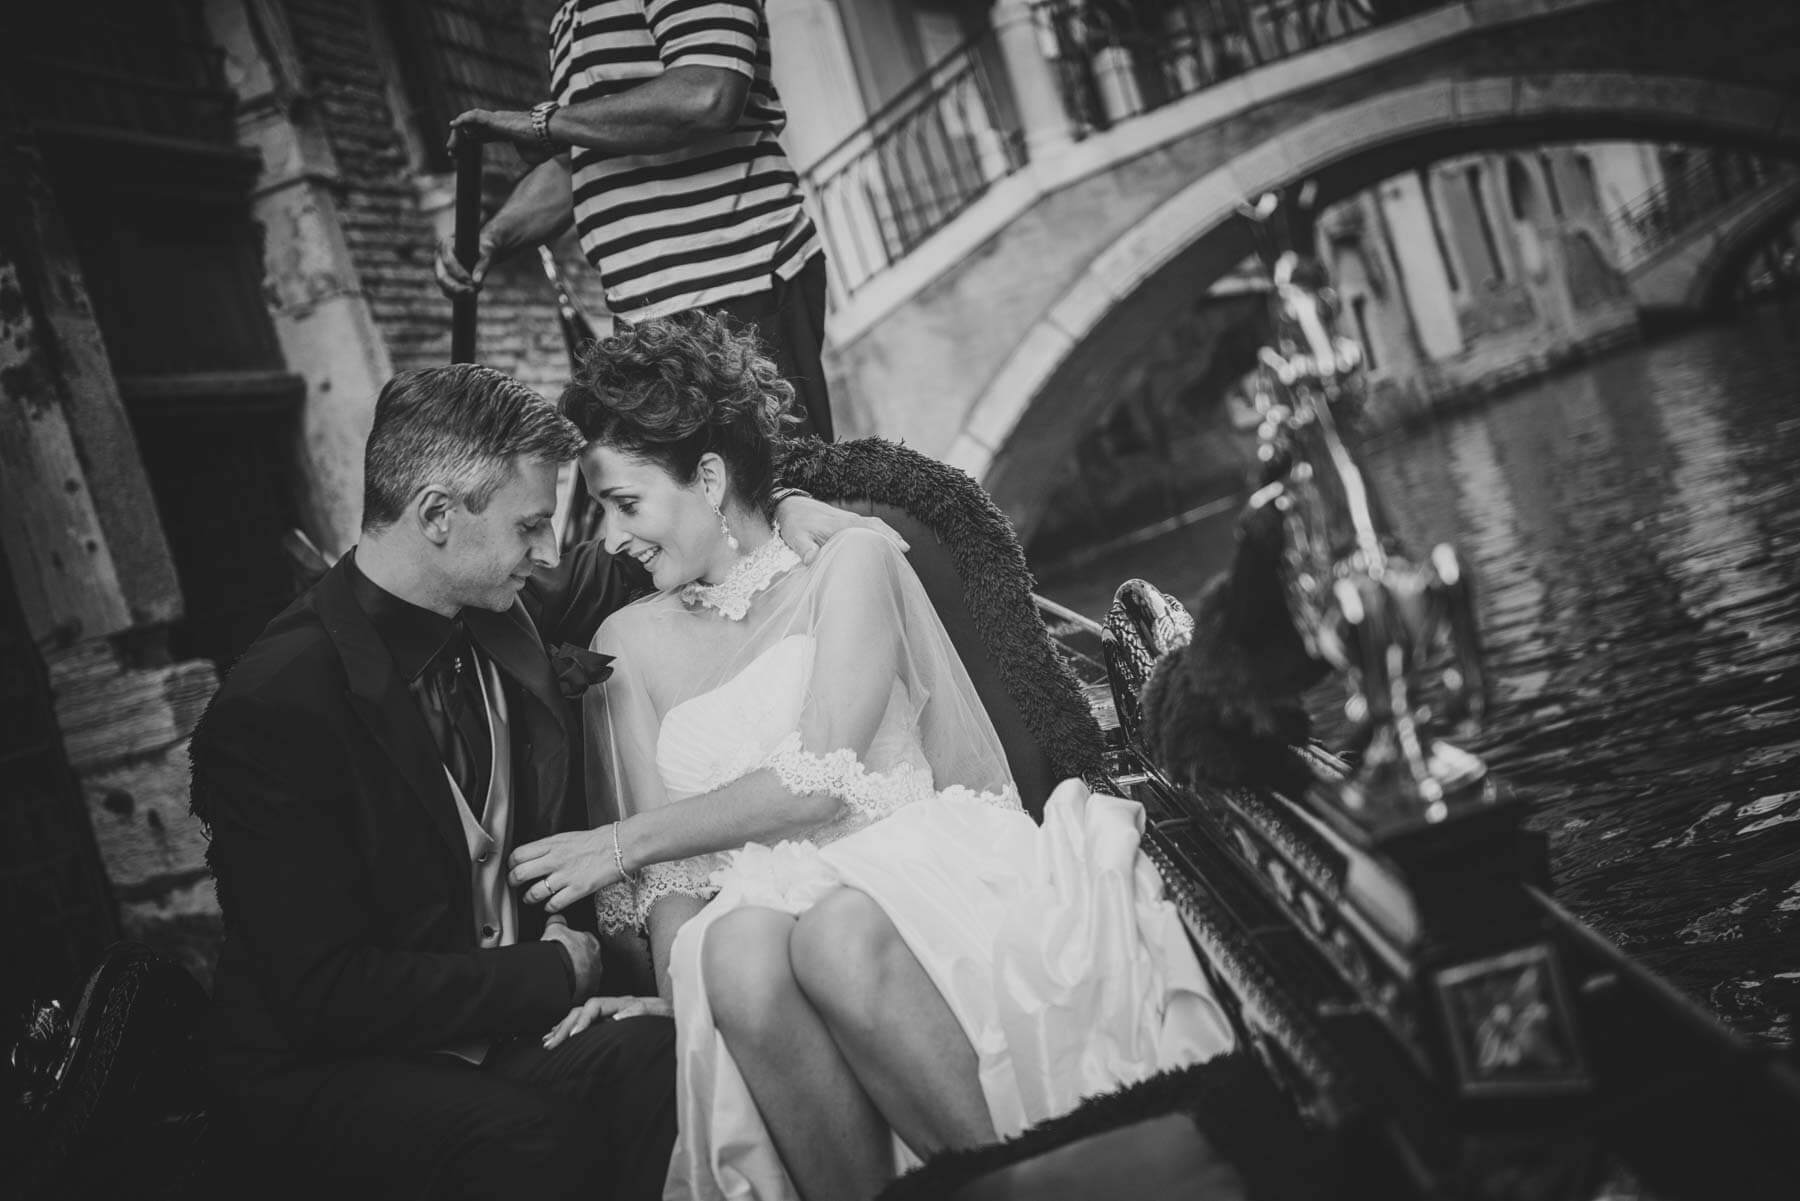 Serena e Vladimir - Matrimonio a Venezia Venice Wedding 16